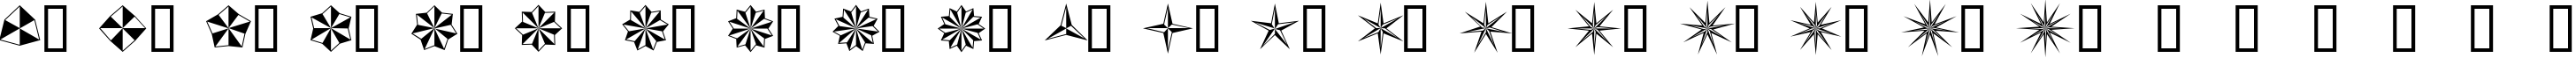 Пример написания английского алфавита шрифтом Basic Star